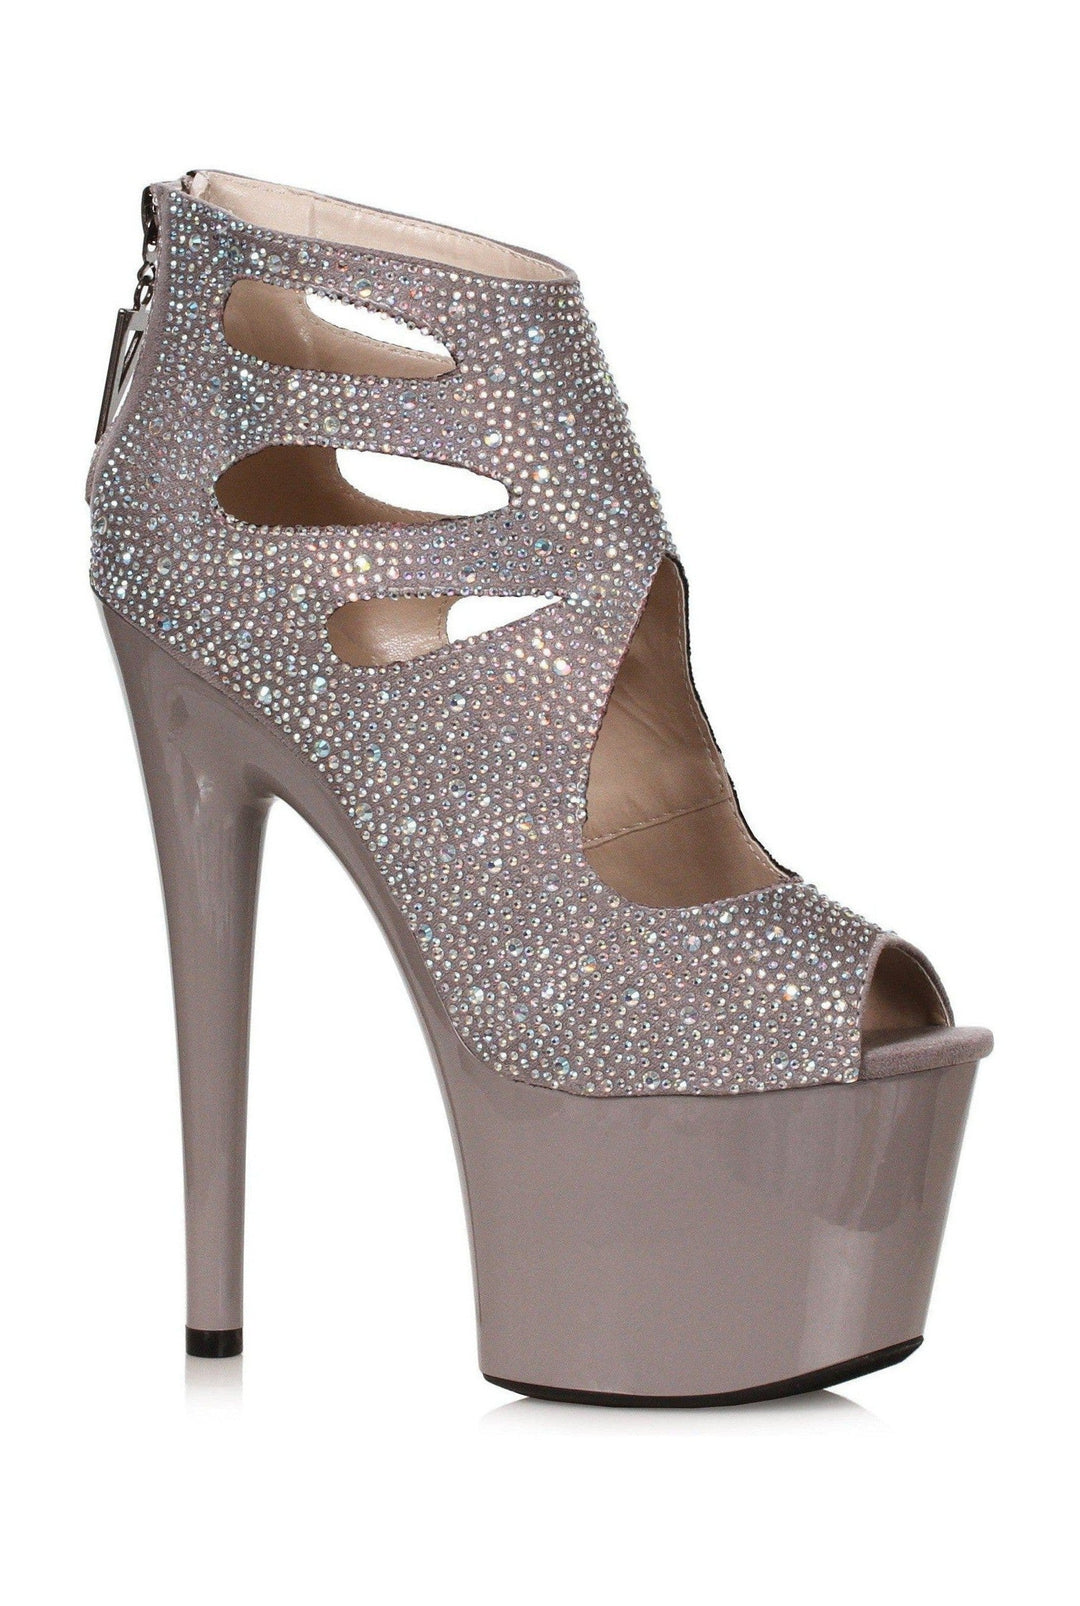 Ellie Shoes Grey Ankle Boots Platform Stripper Shoes | Buy at Sexyshoes.com